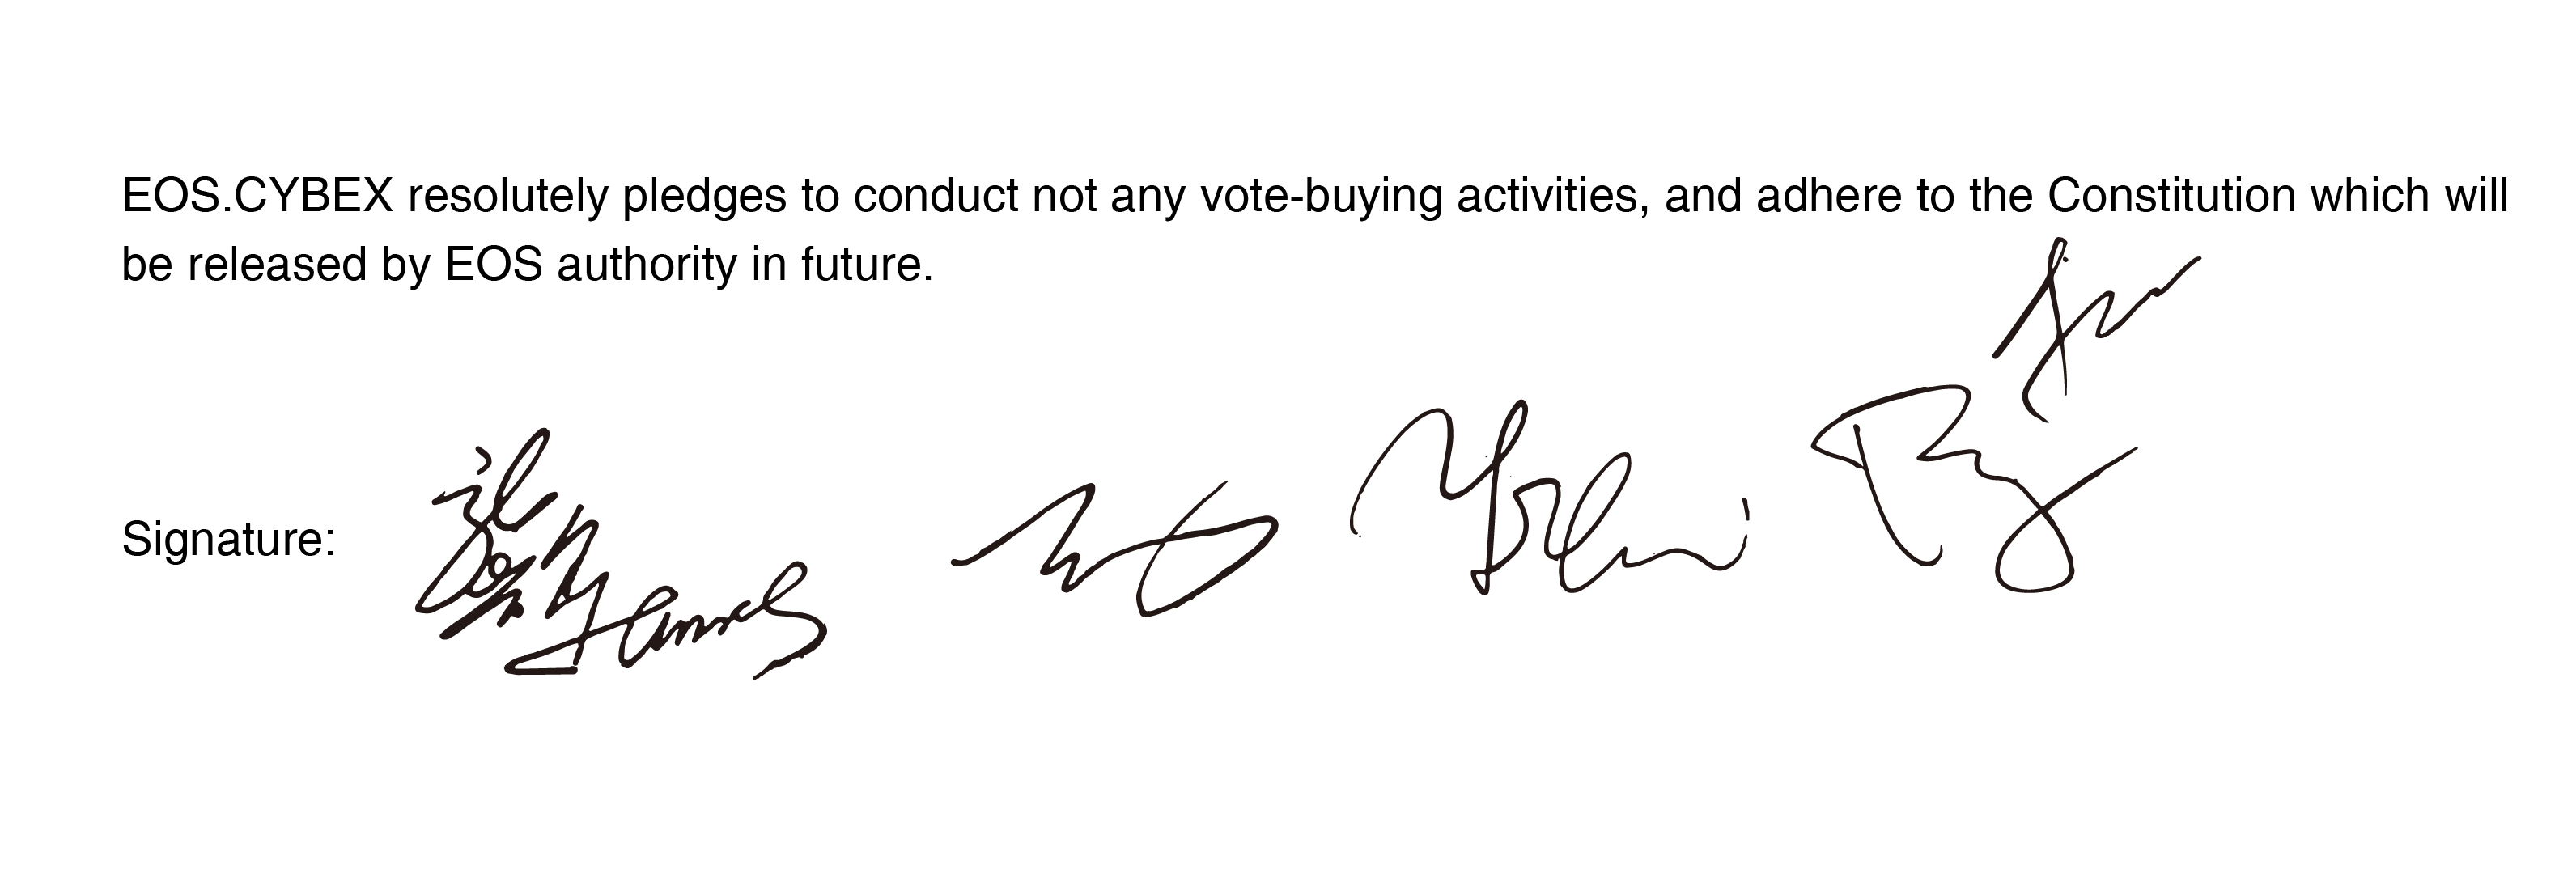 signature.png